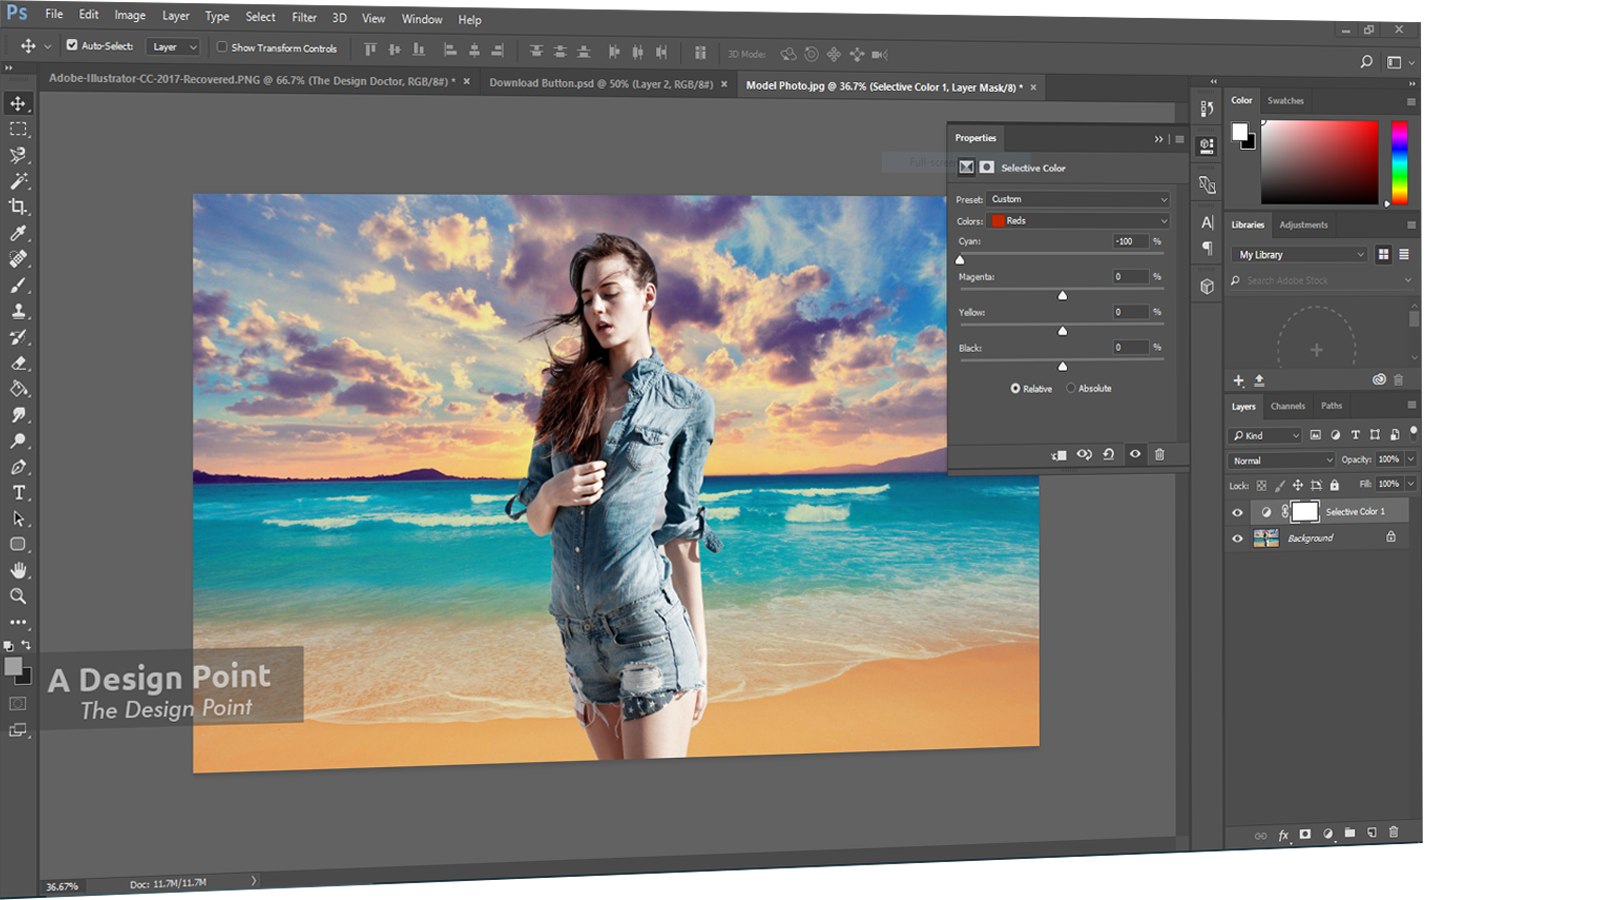 Adobe Photoshop Cc 2017 Crack Download Mac